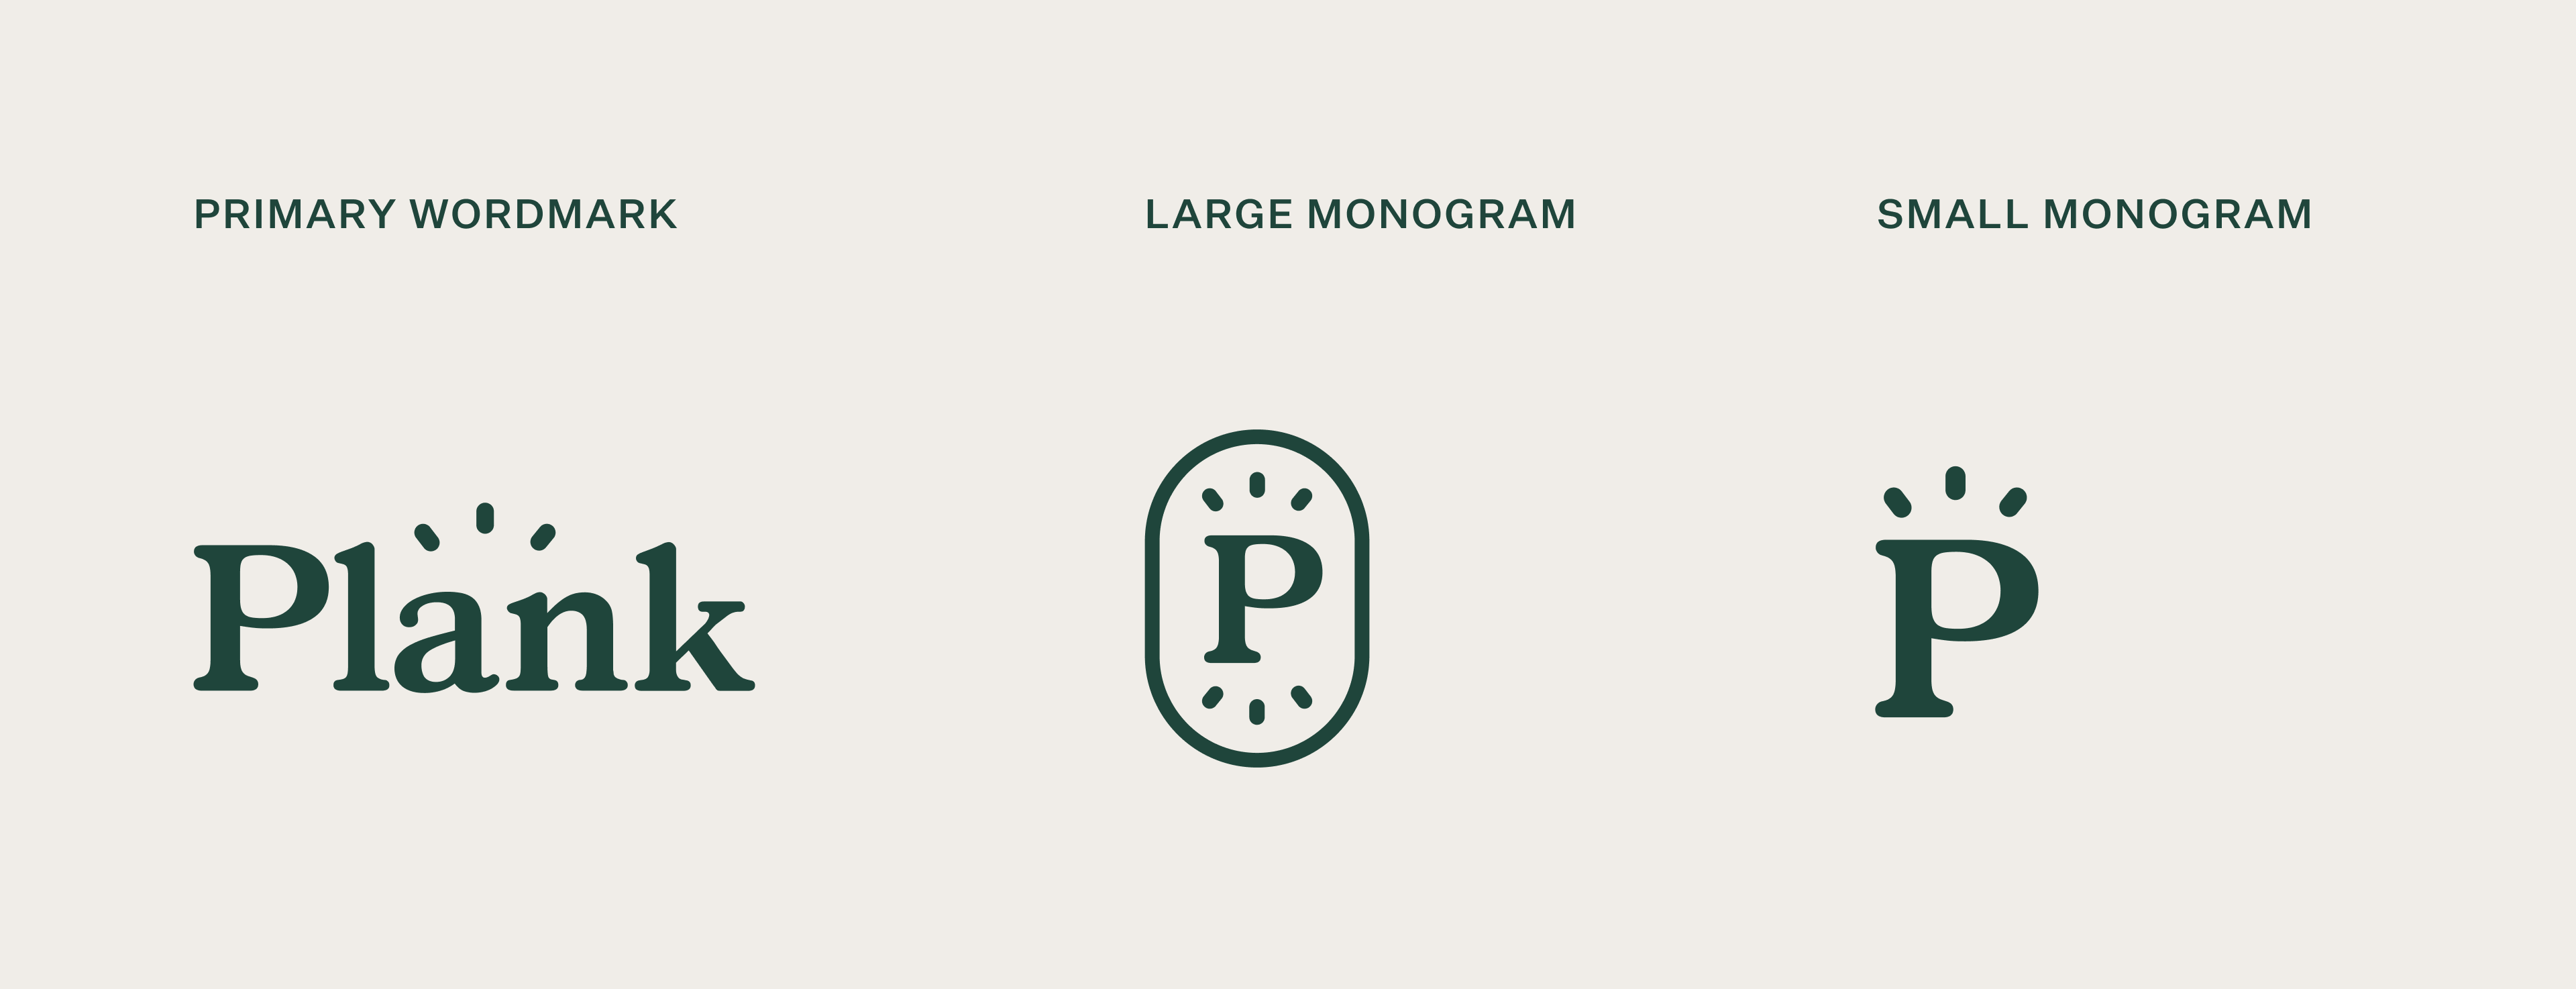 primary wordmark, large monogram, and small monogram